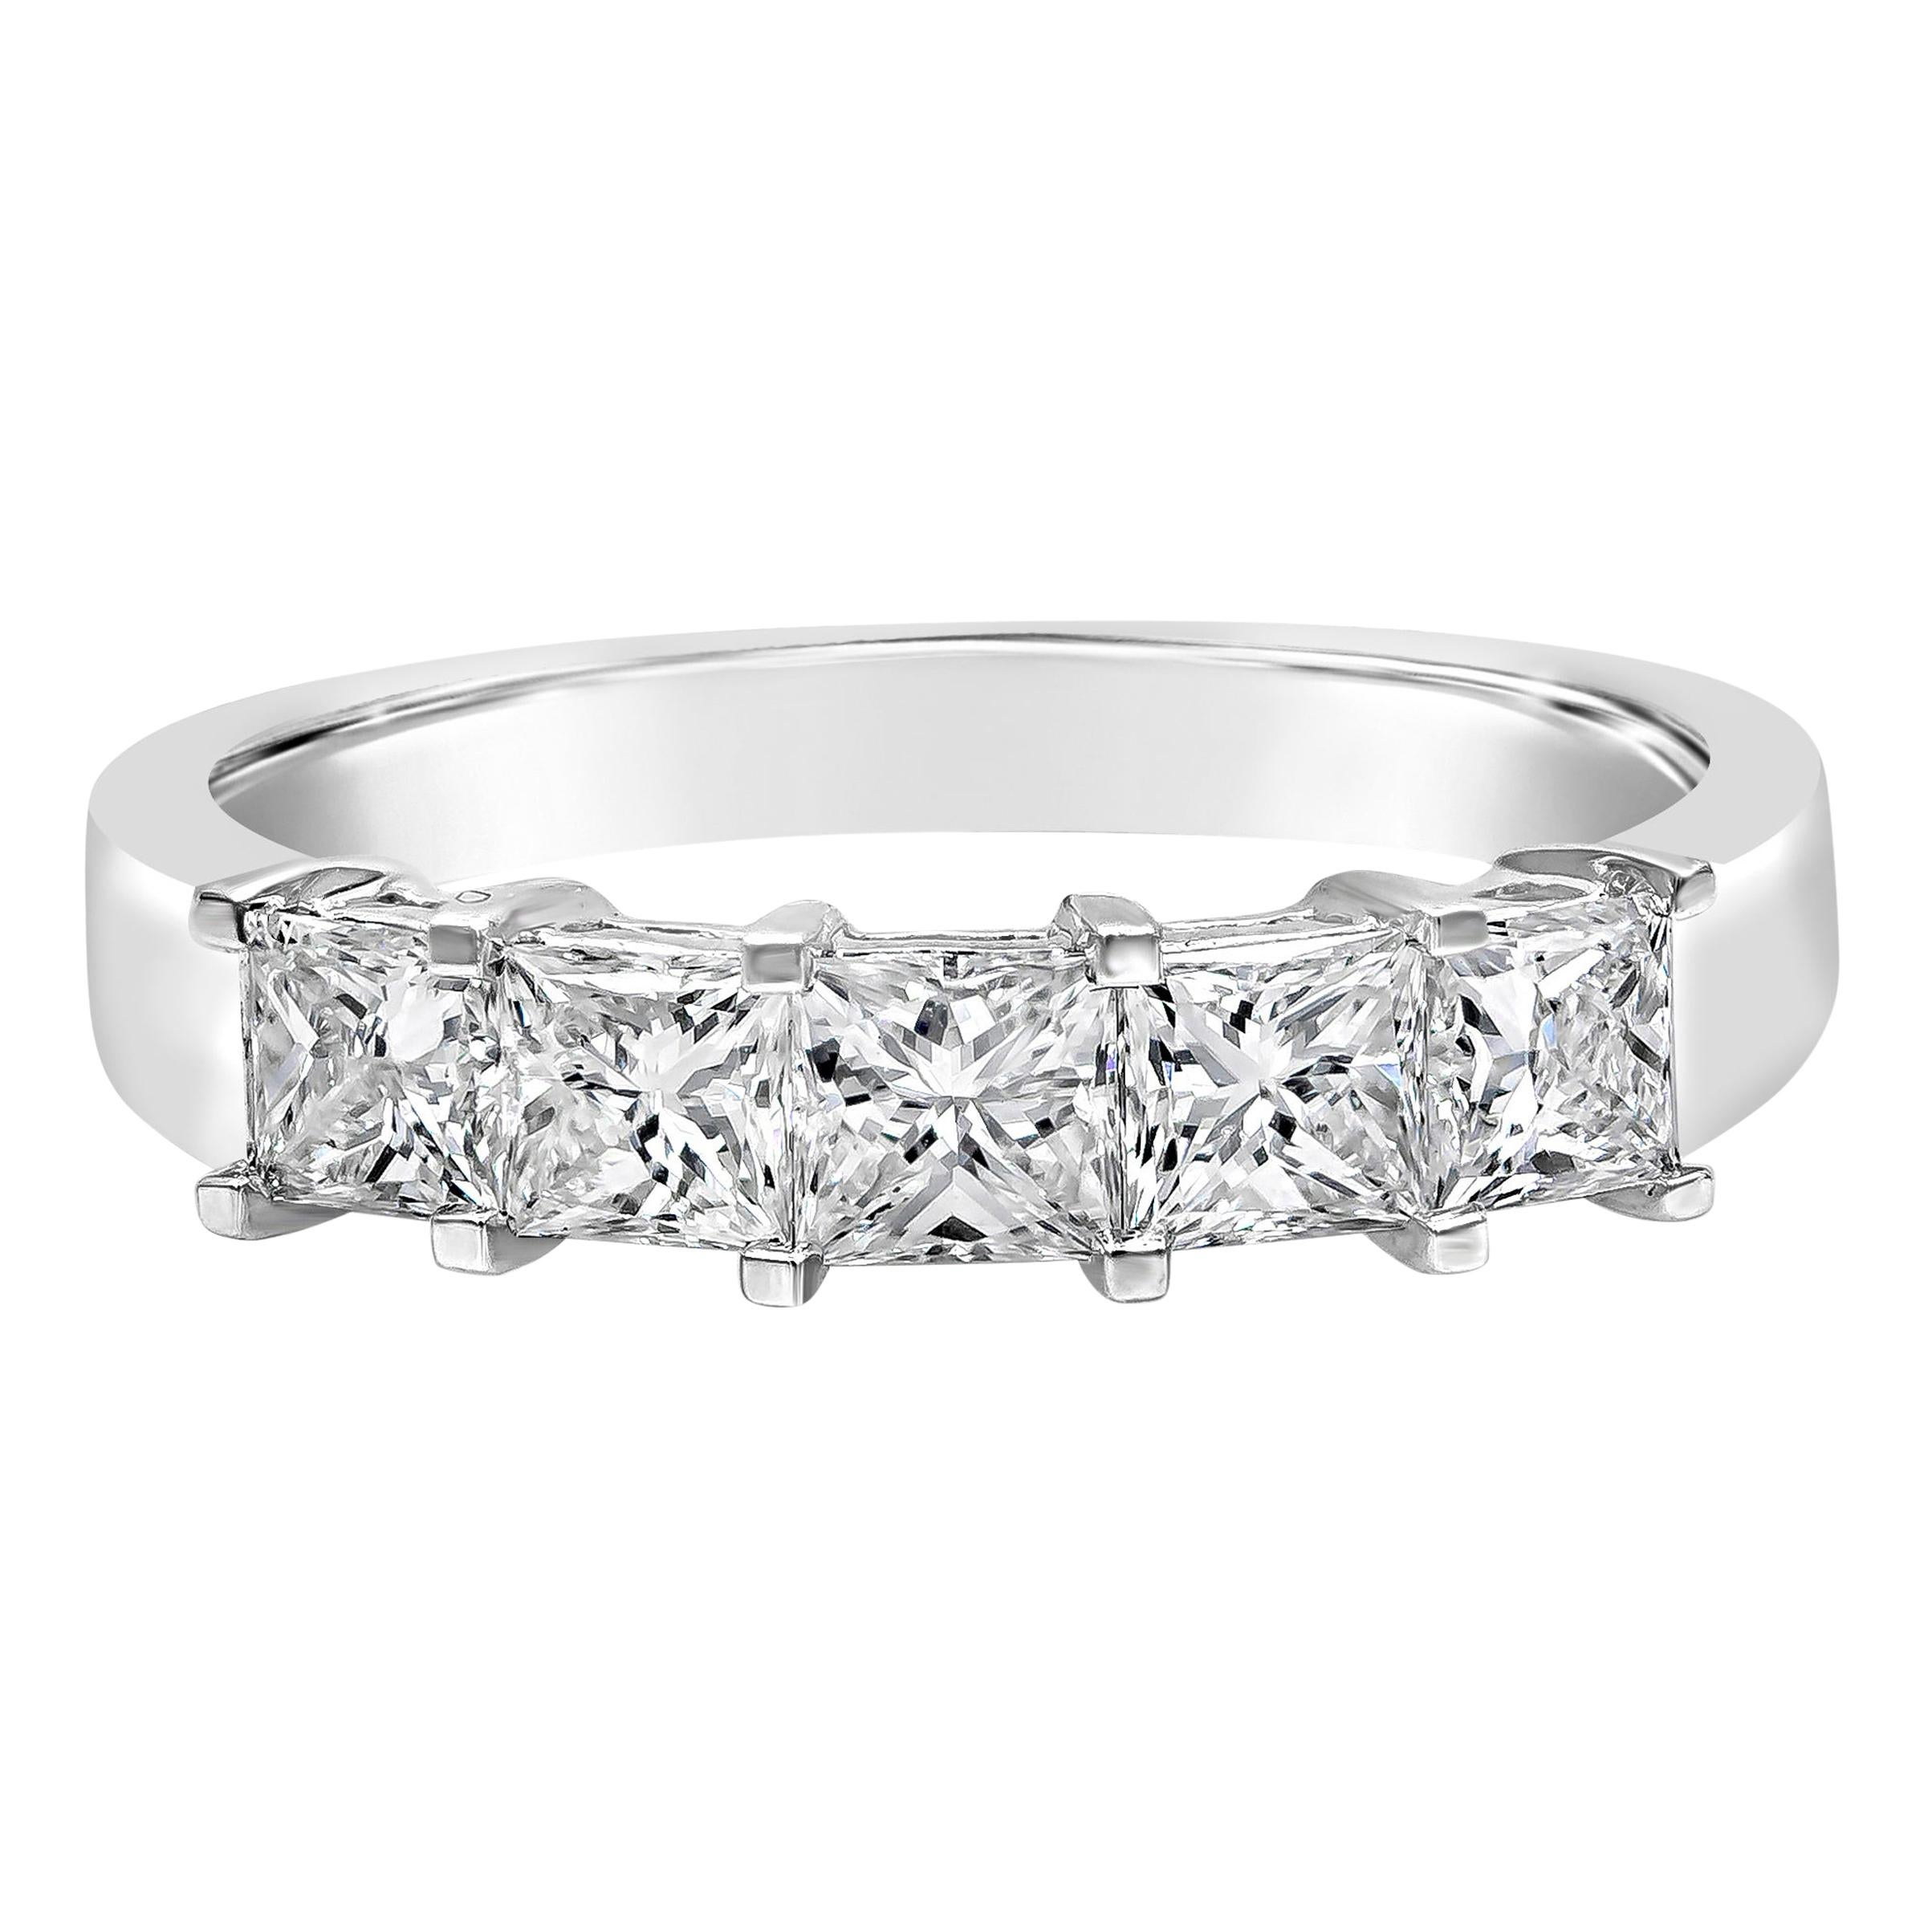 Roman Malakov 1.26 Carat Total Princess Cut Diamond Five-Stone Wedding Band Ring